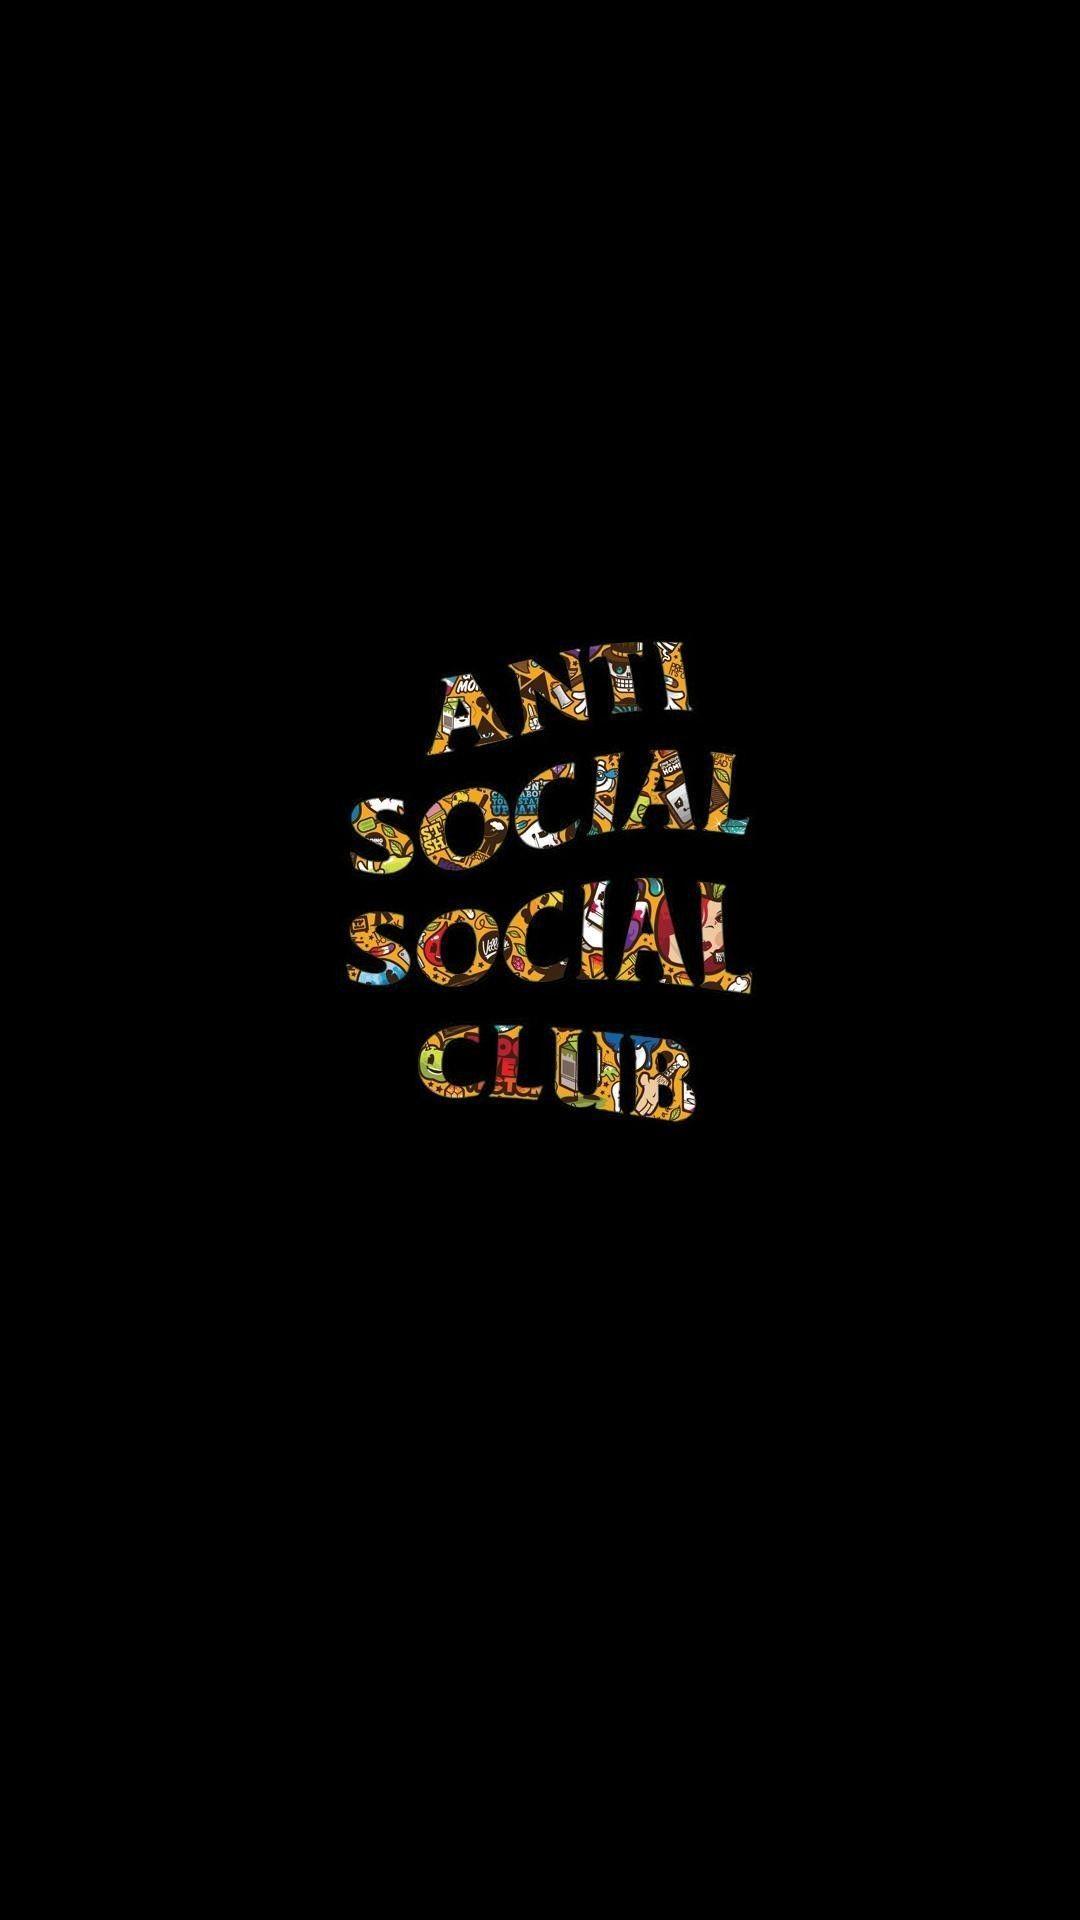 Antisocialsocialclub. Pop art wallpaper, Hypebeast iphone